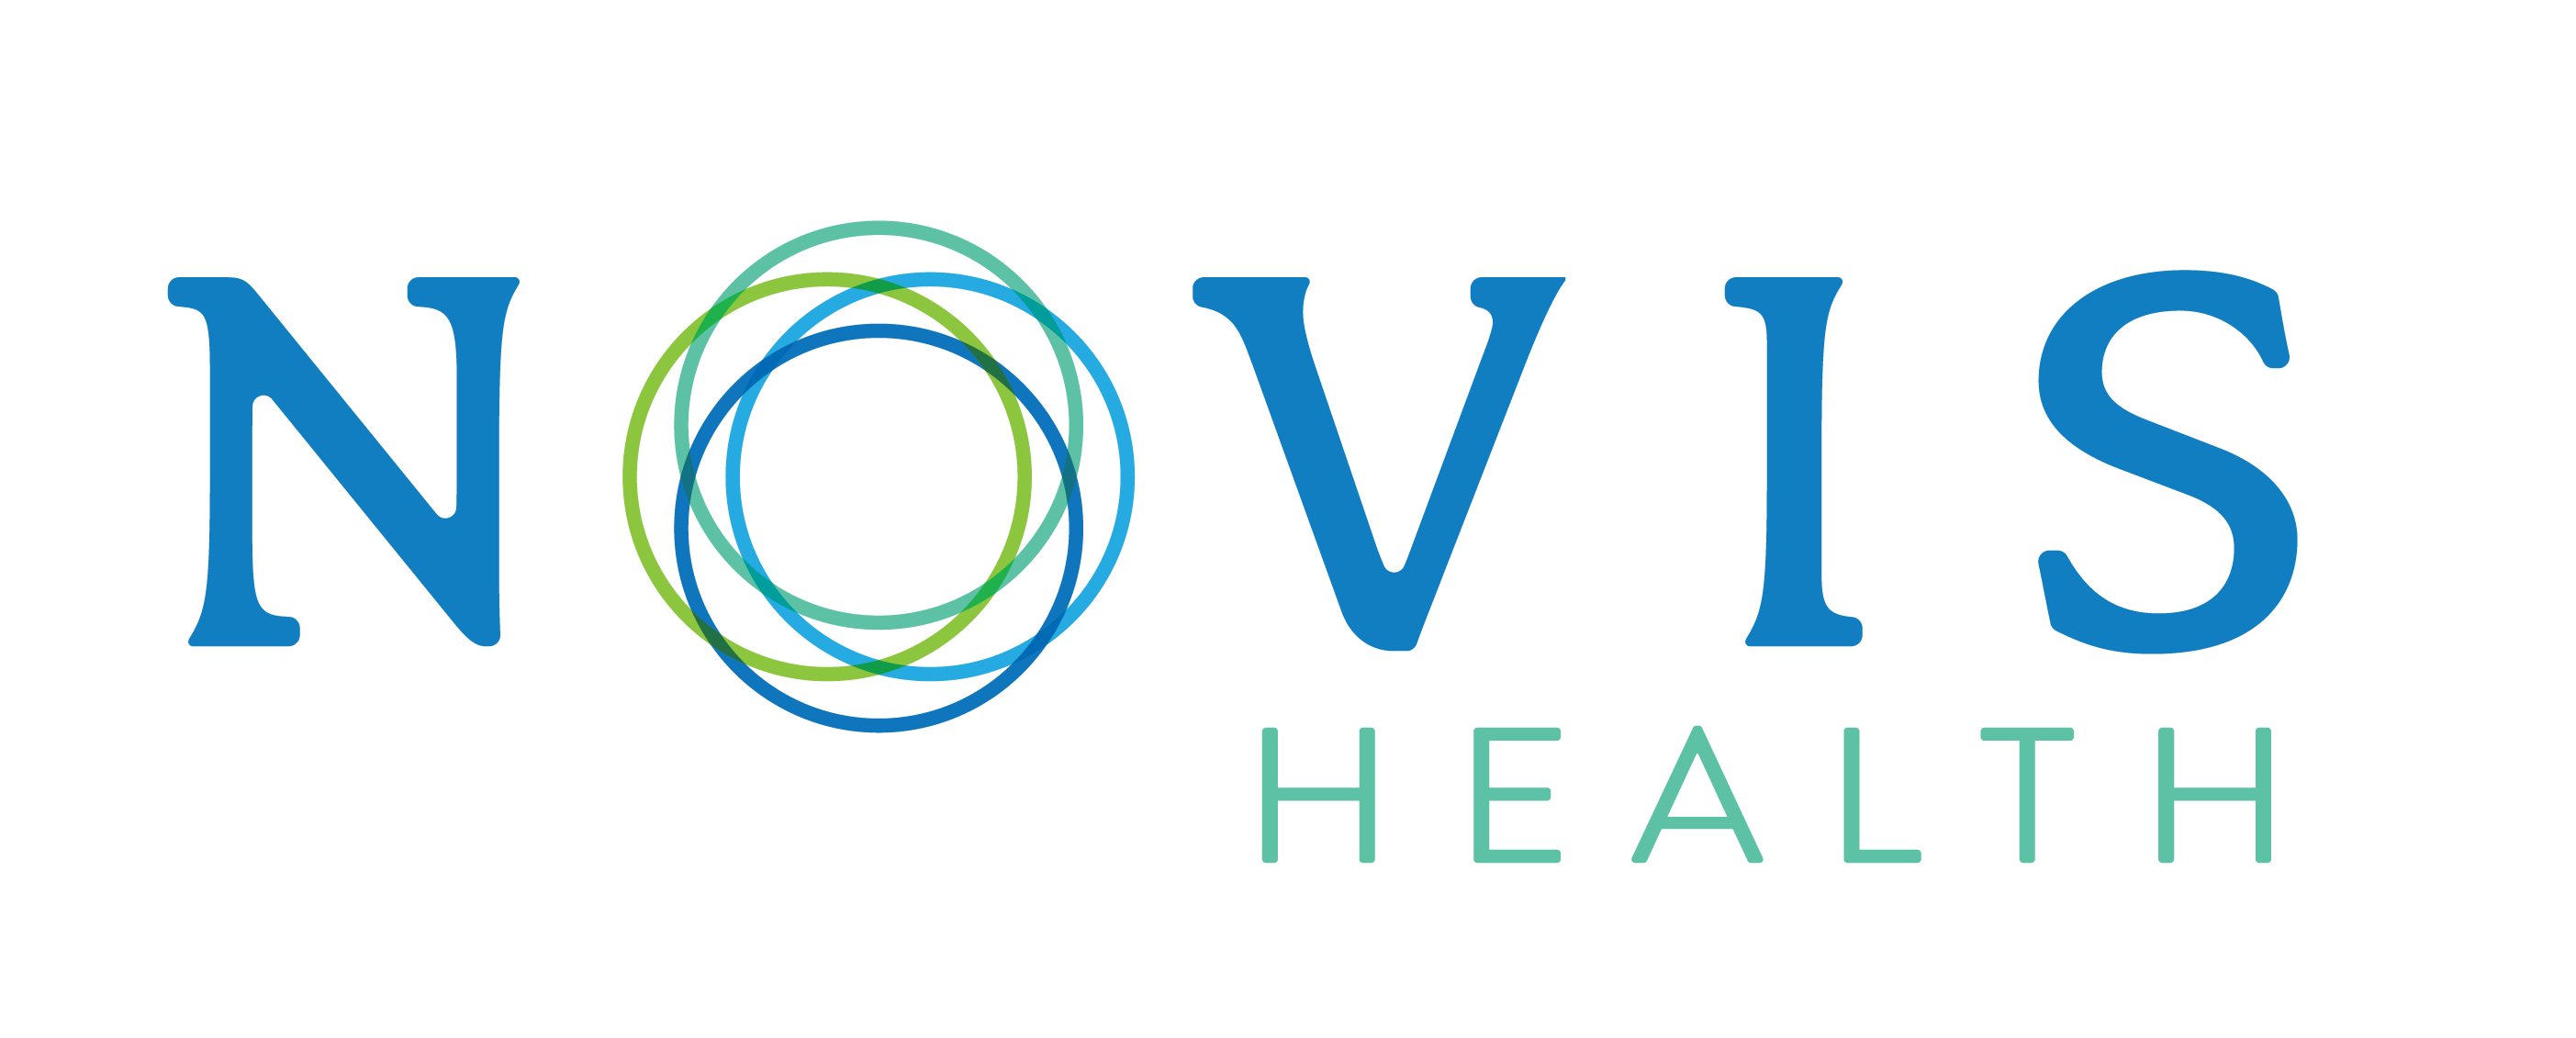 Novis Health logo Final-01